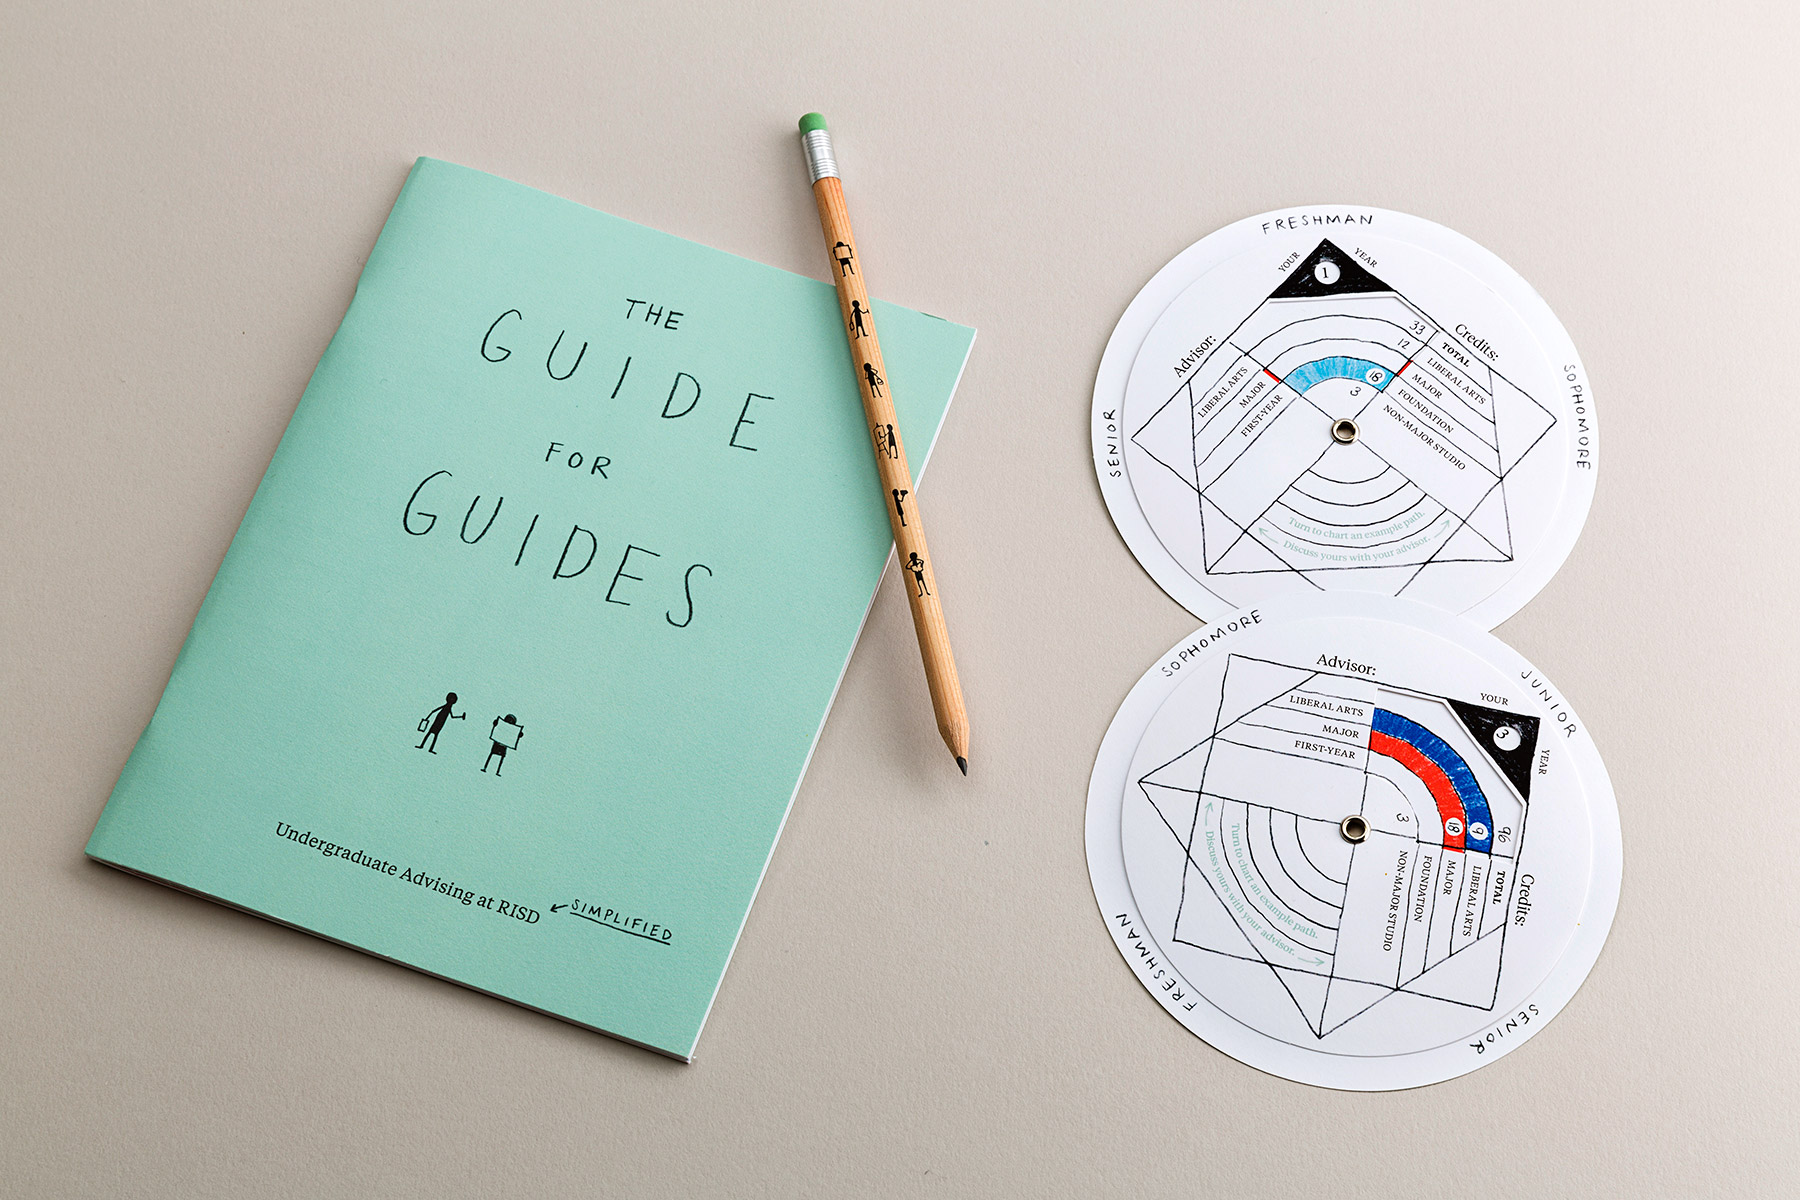 RISD Advising Guide cover, custom pencil, and decision wheel